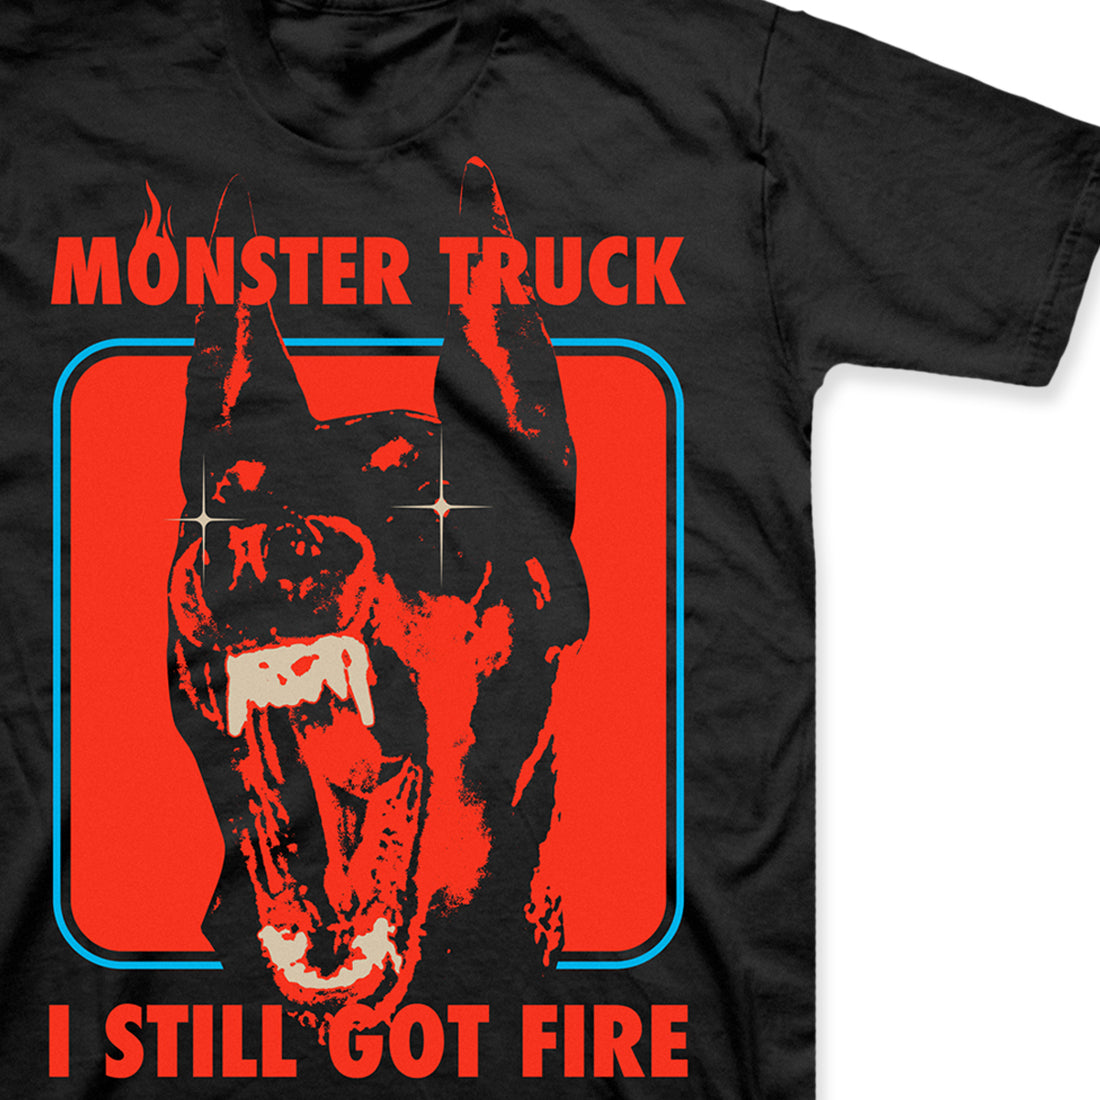 Monster Truck - I Still Got Fire - Black Tee